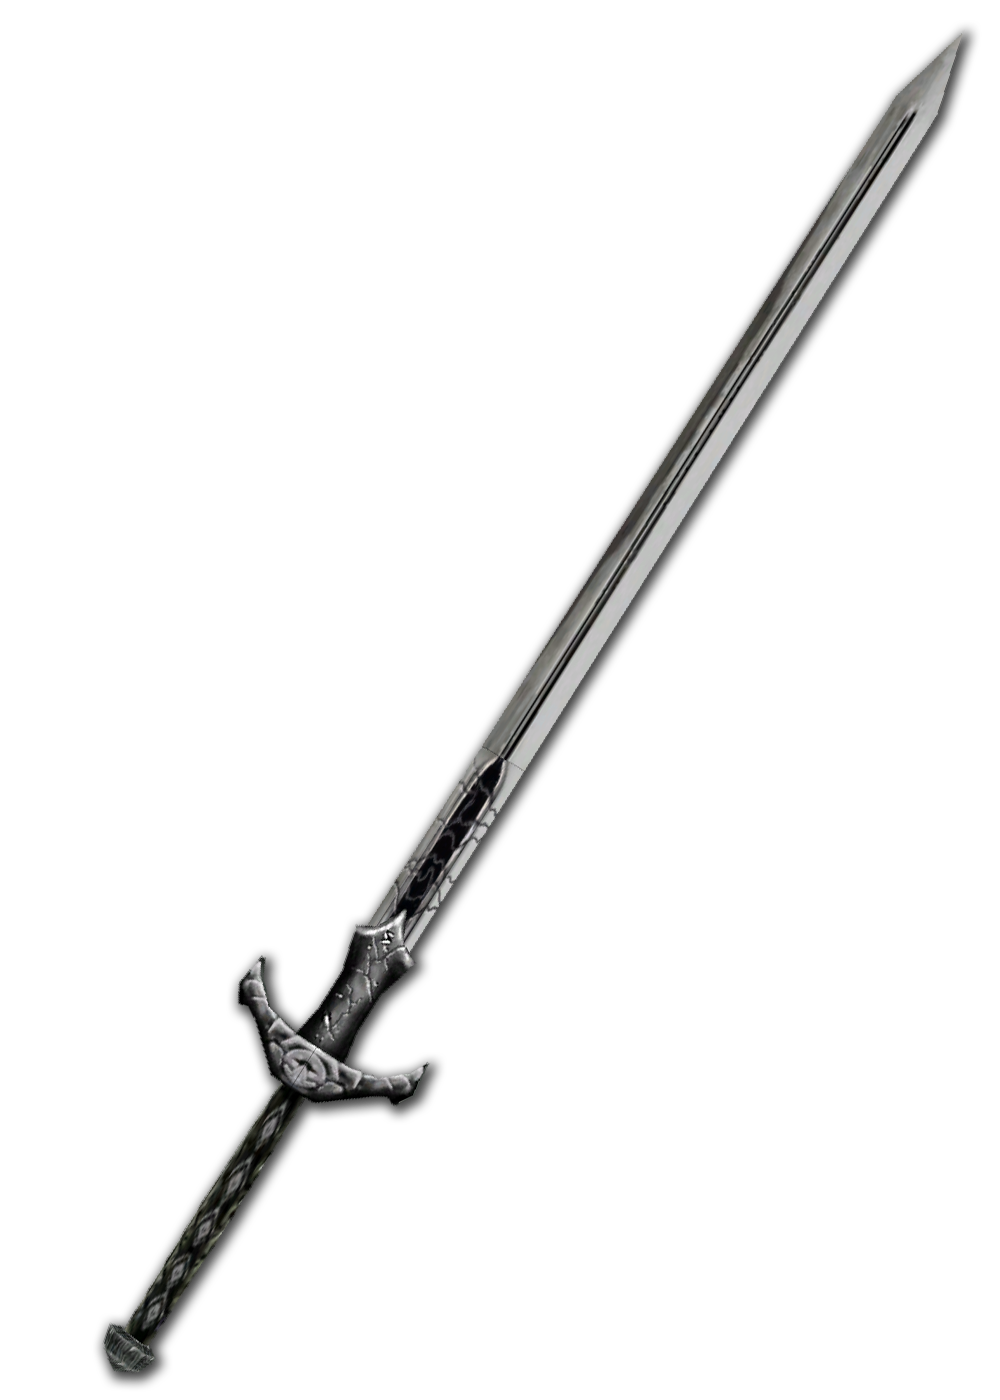 Sword PNG image